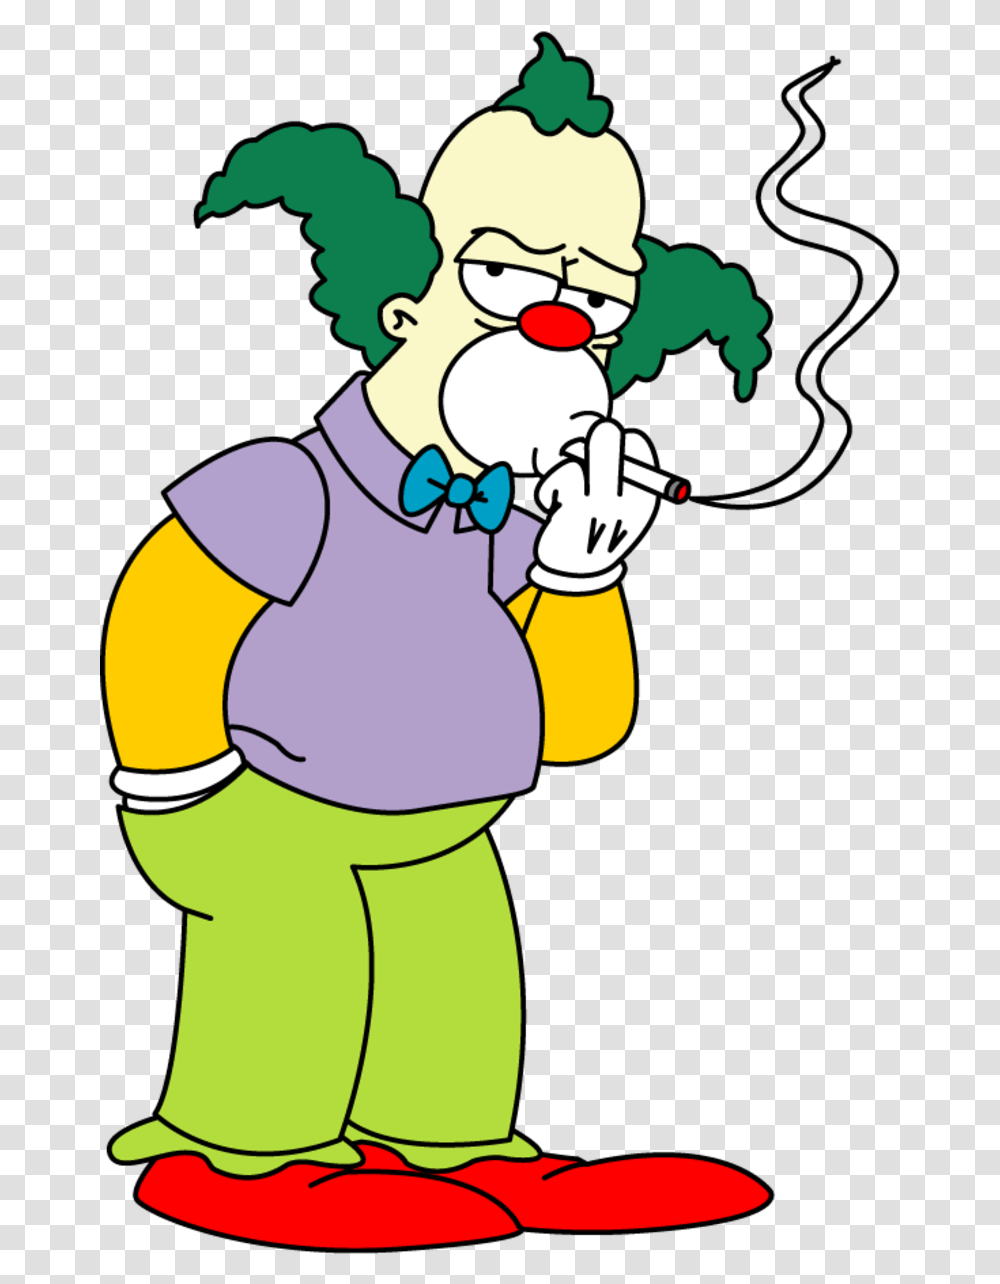 Krusty The Clown Clipart Krusty The Clown Smoking, Performer, Juggling, Elf Transparent Png